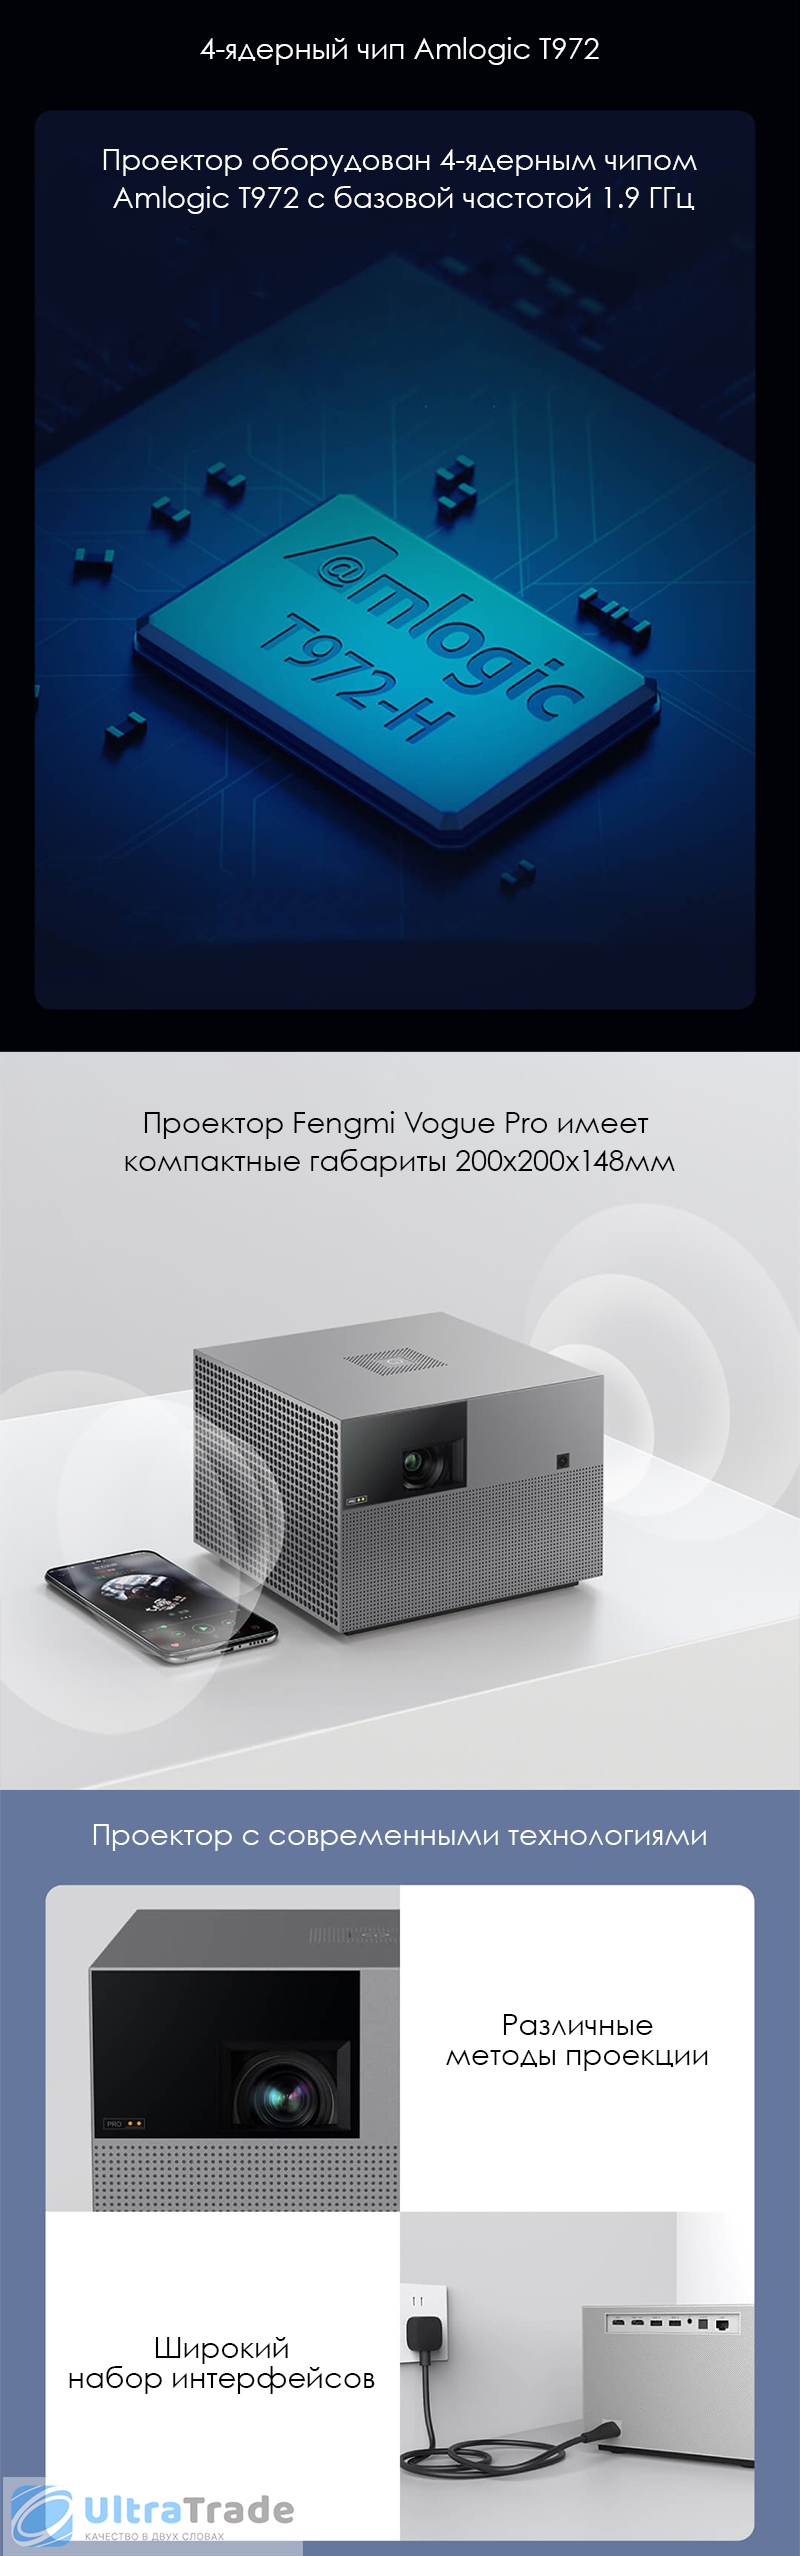 Проектор Xiaomi Wemax Fengmi Vogue Pro Peak Meter Projector (M135FCN-Pro)